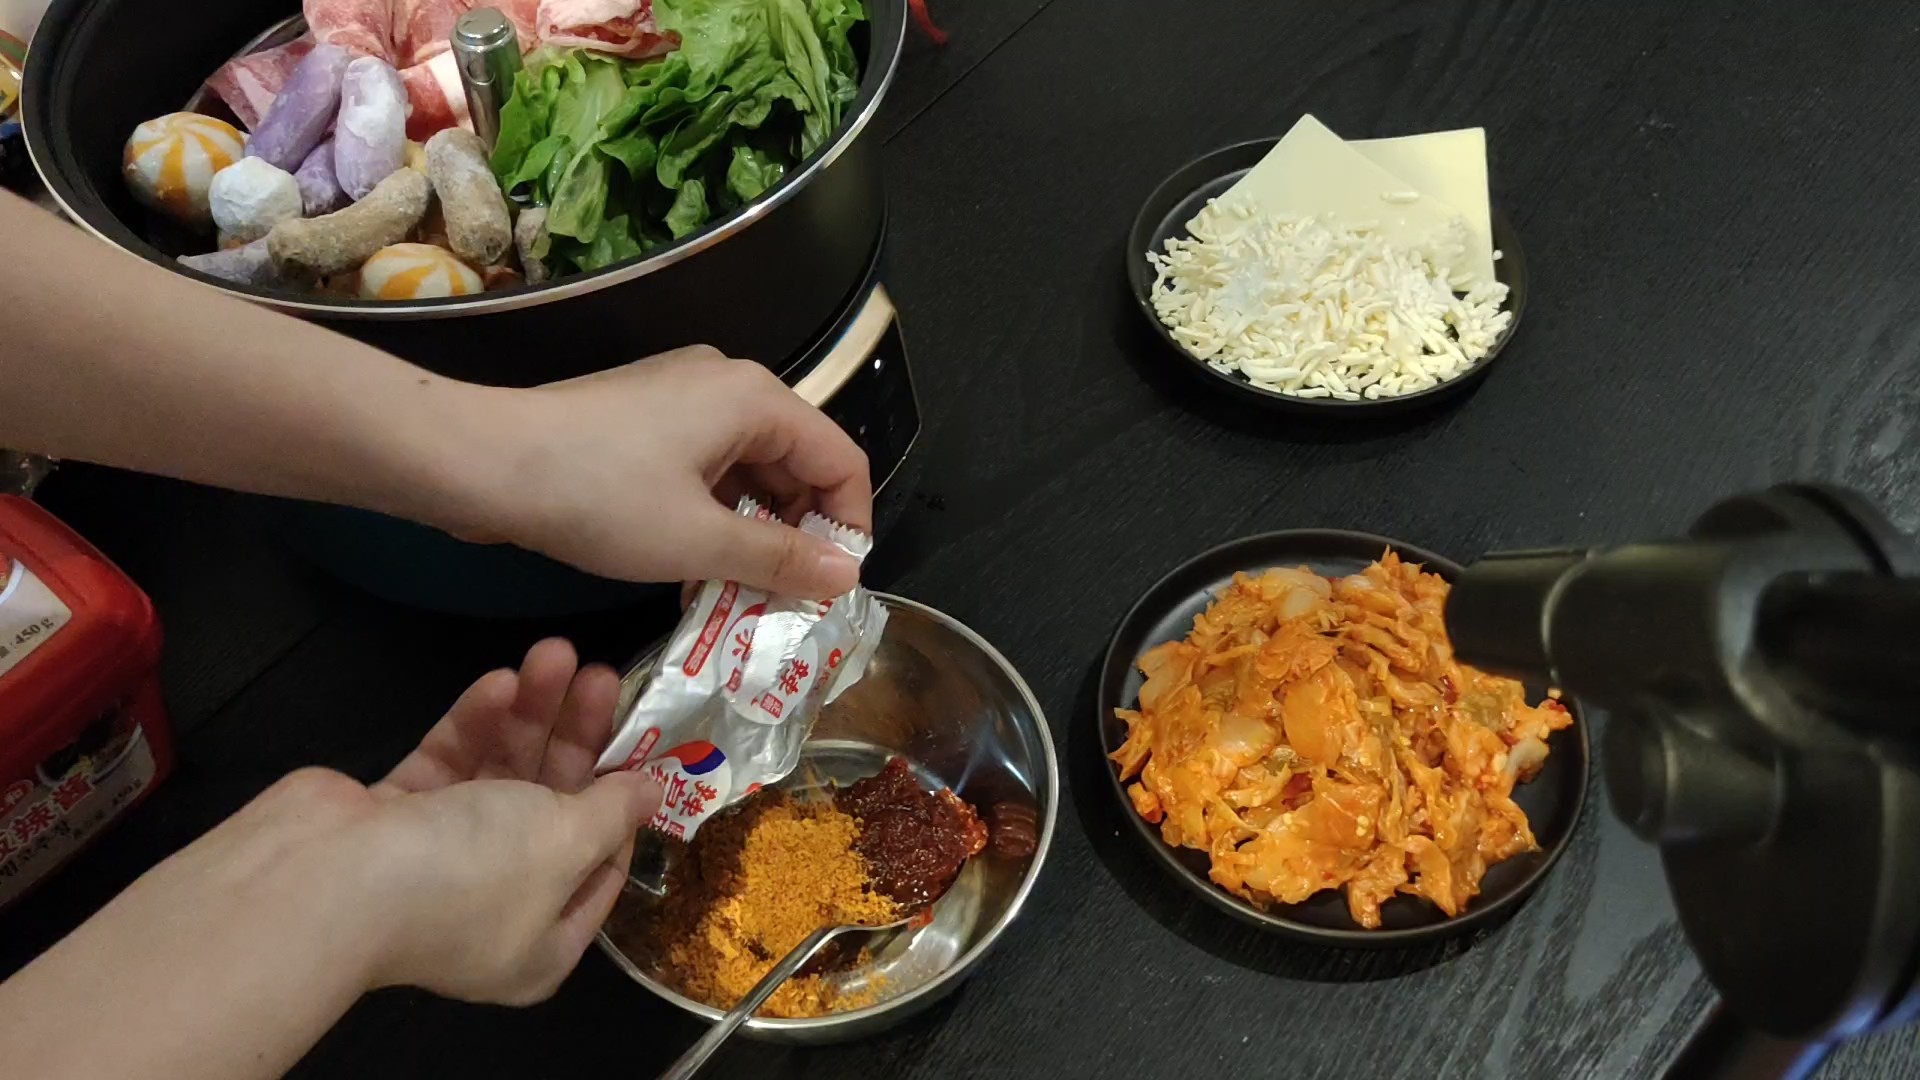 Korean-style Hot Pot Full of Cheese recipe